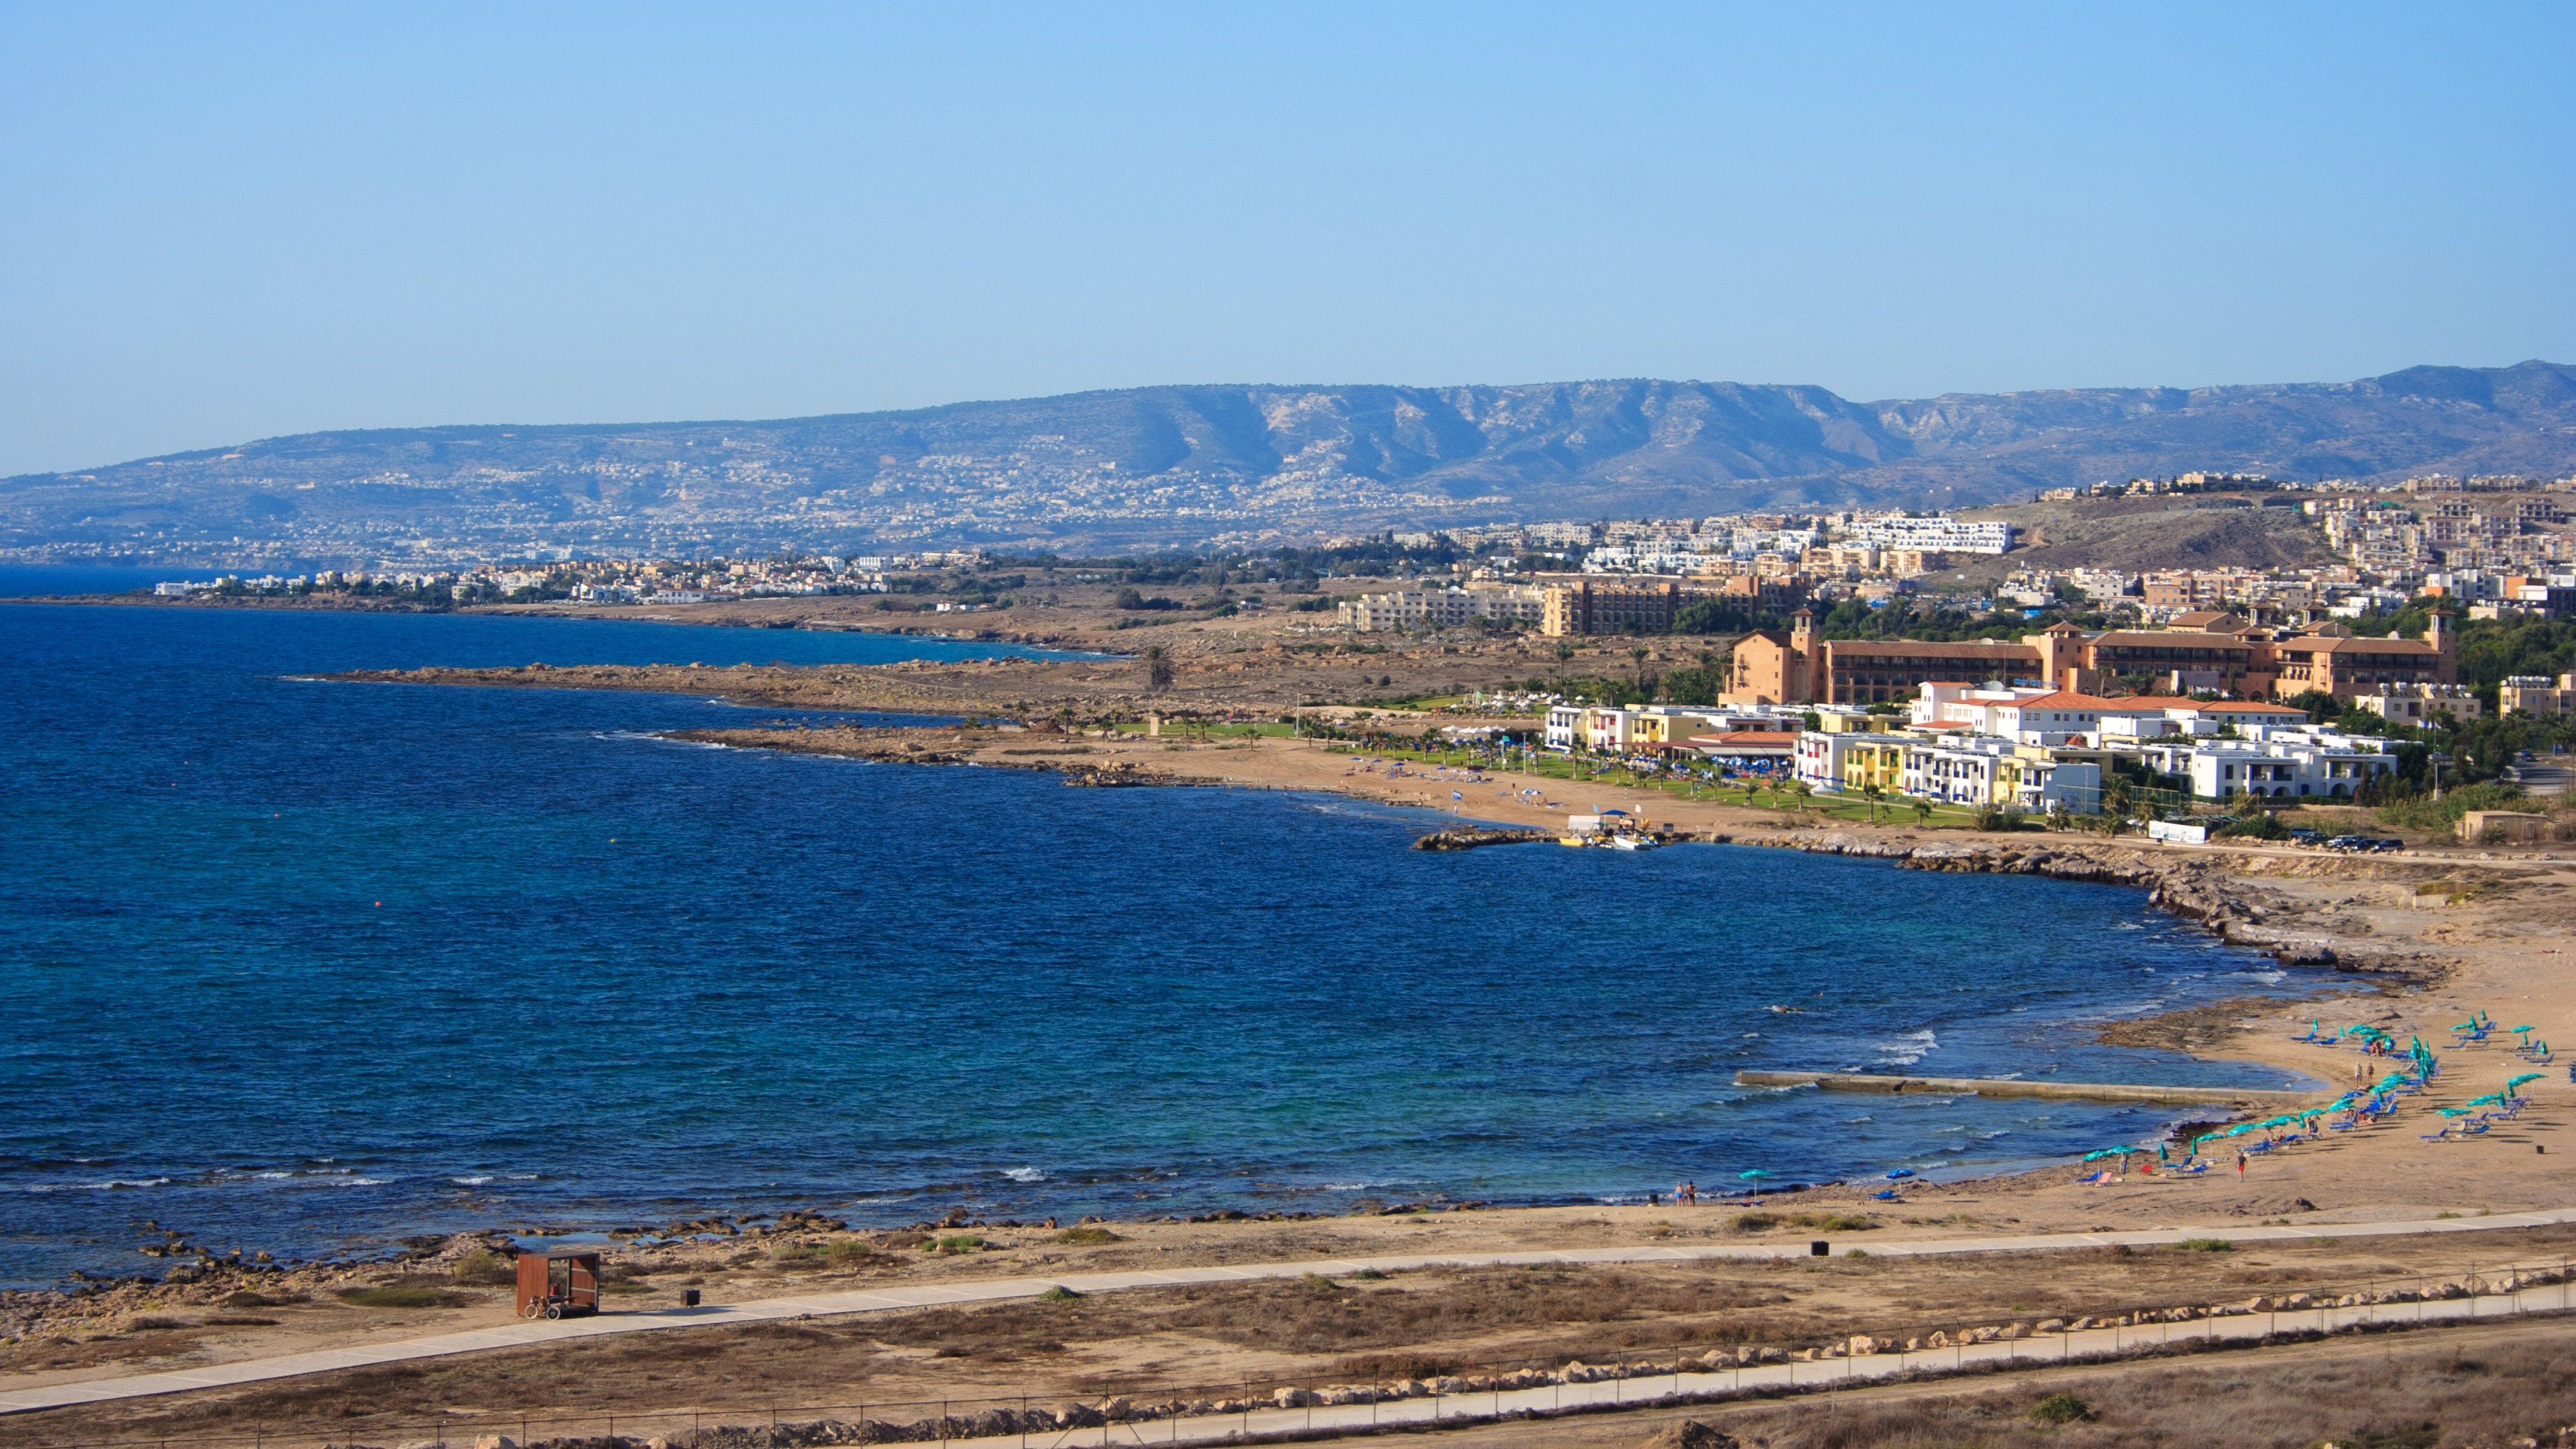 Coastal Town landscape in Cyprus image - Free stock photo - Public ...